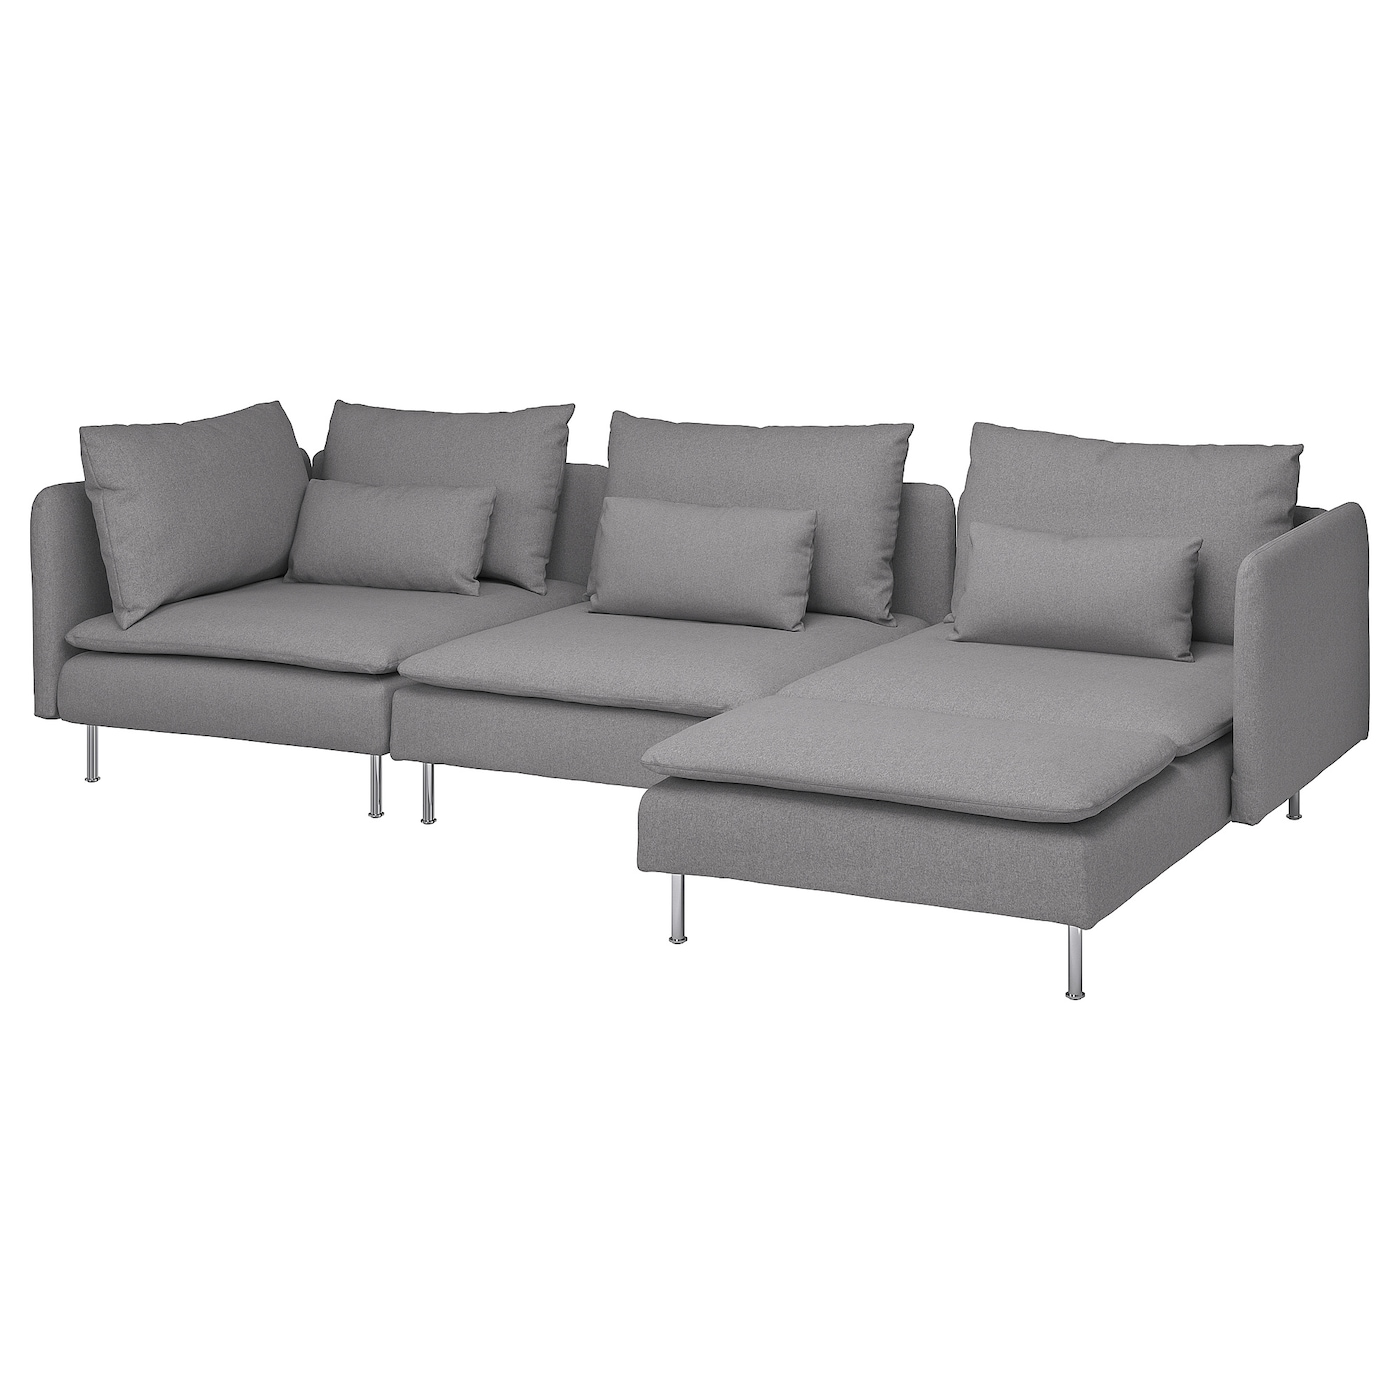 SÖDERHAMN 4-seat sofa with chaise longue Tonerud grey - IKEA